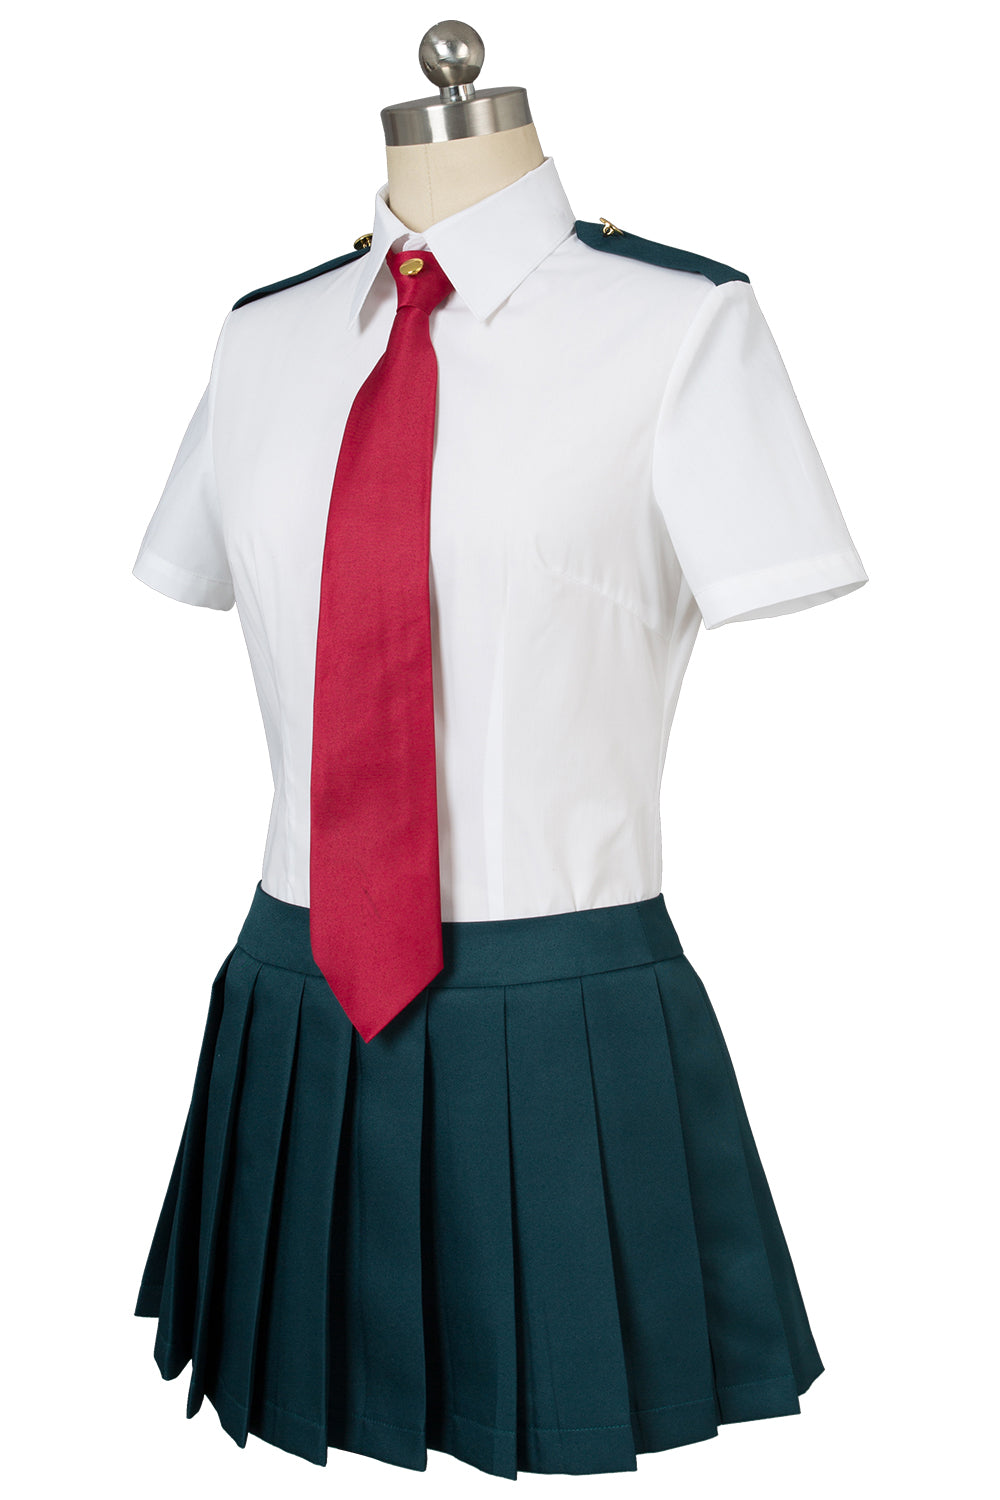 Boku No Hero Academia BNHA Uniform Schuluniform Cosplay Kostüm